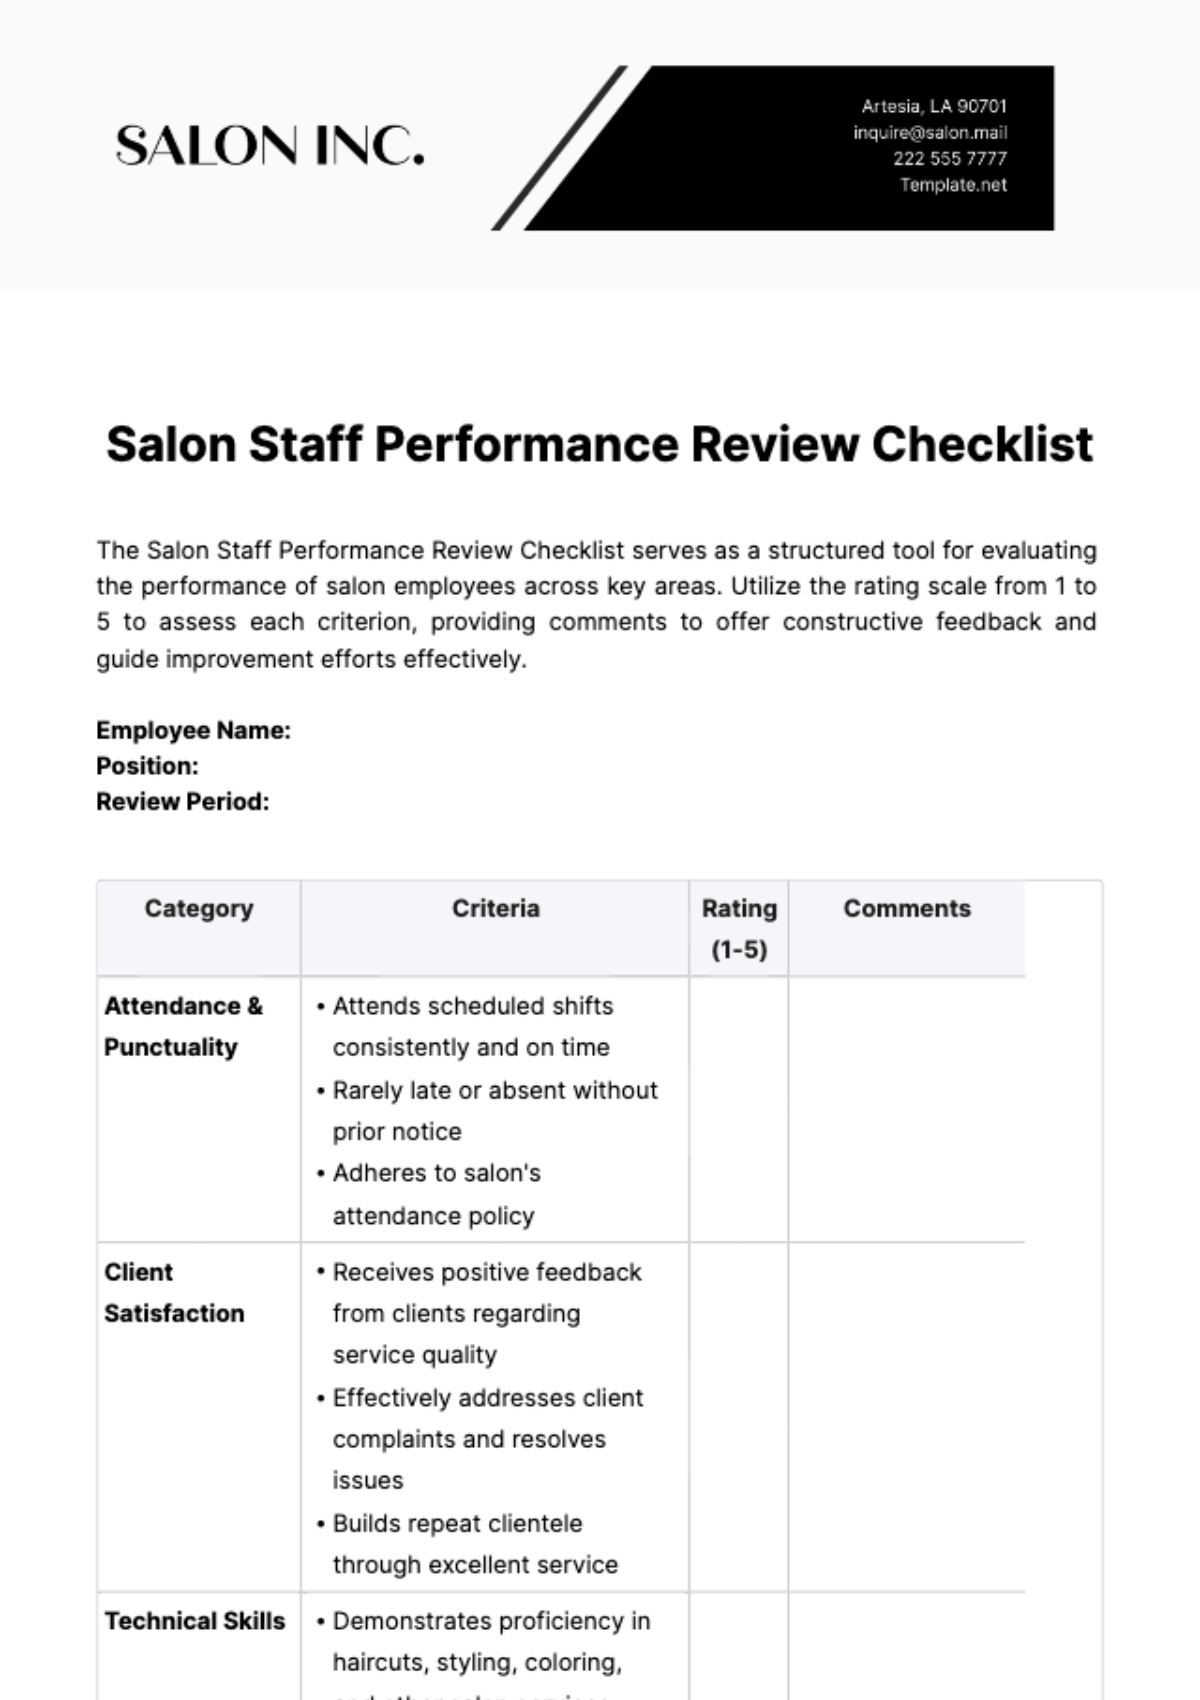 Salon Staff Performance Review Checklist Template